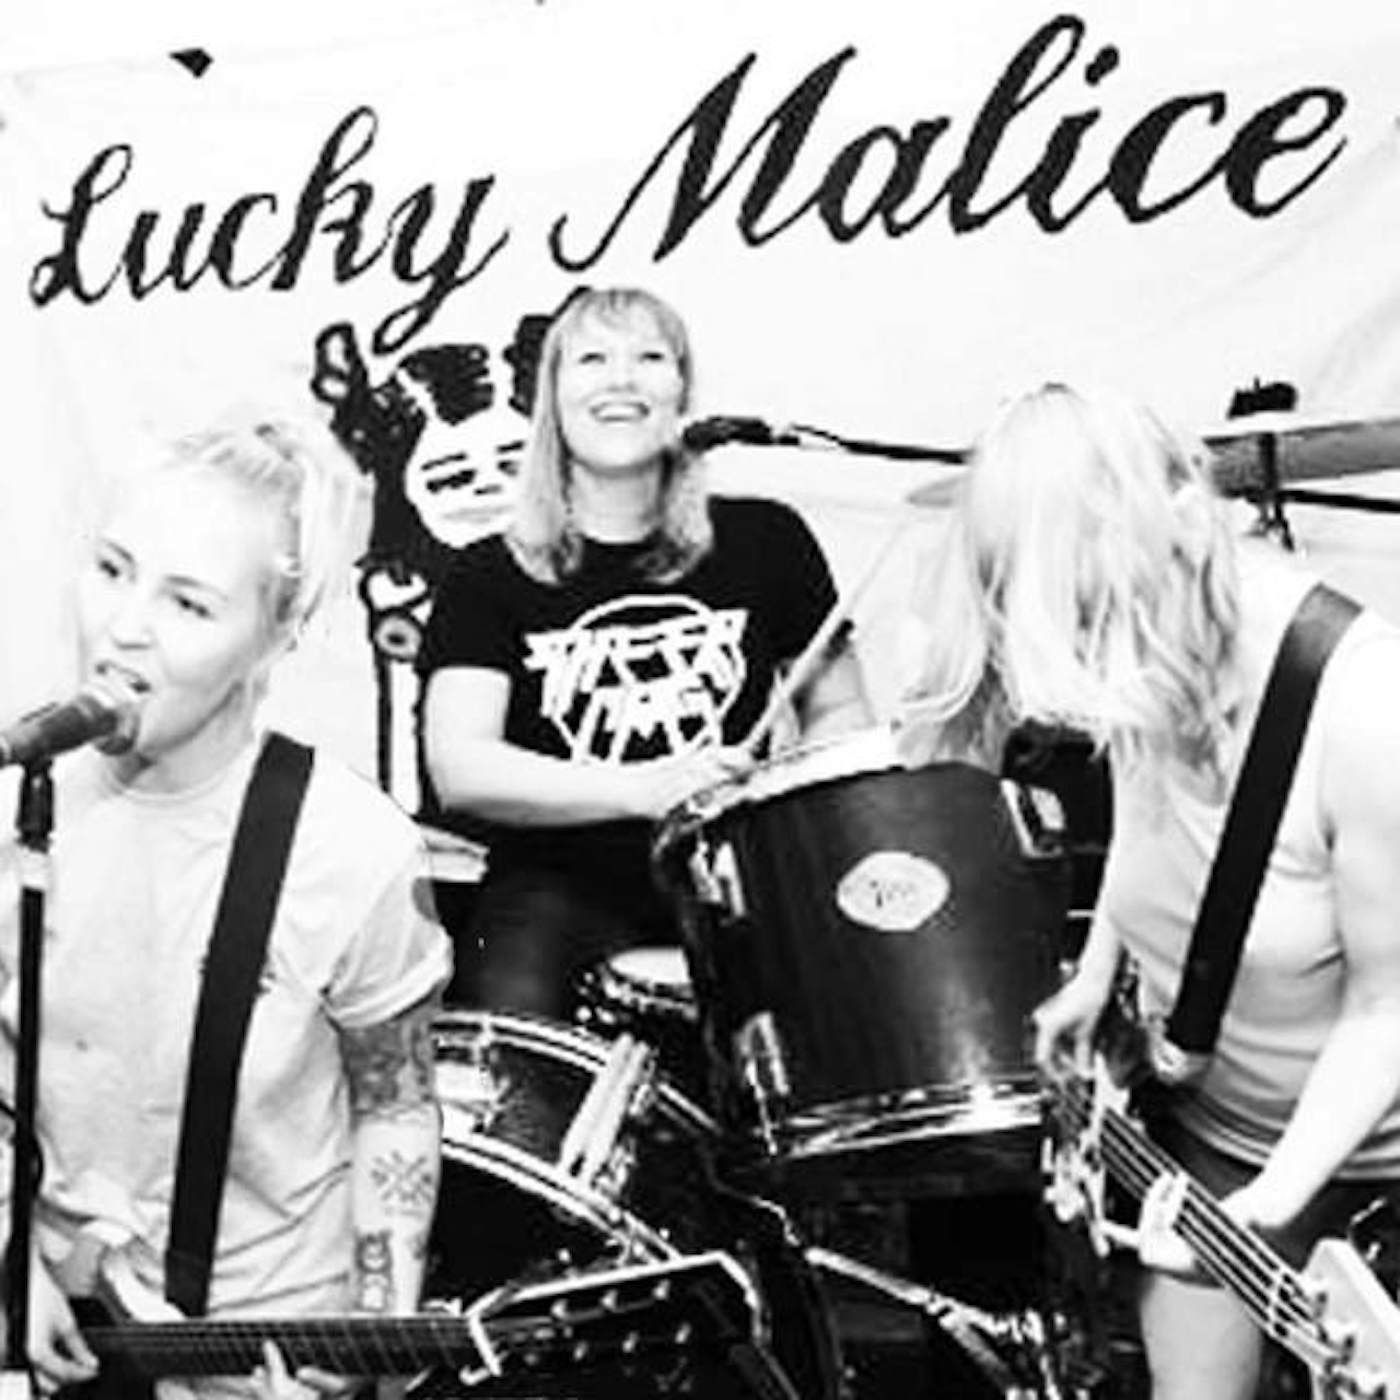 Lucky Malice